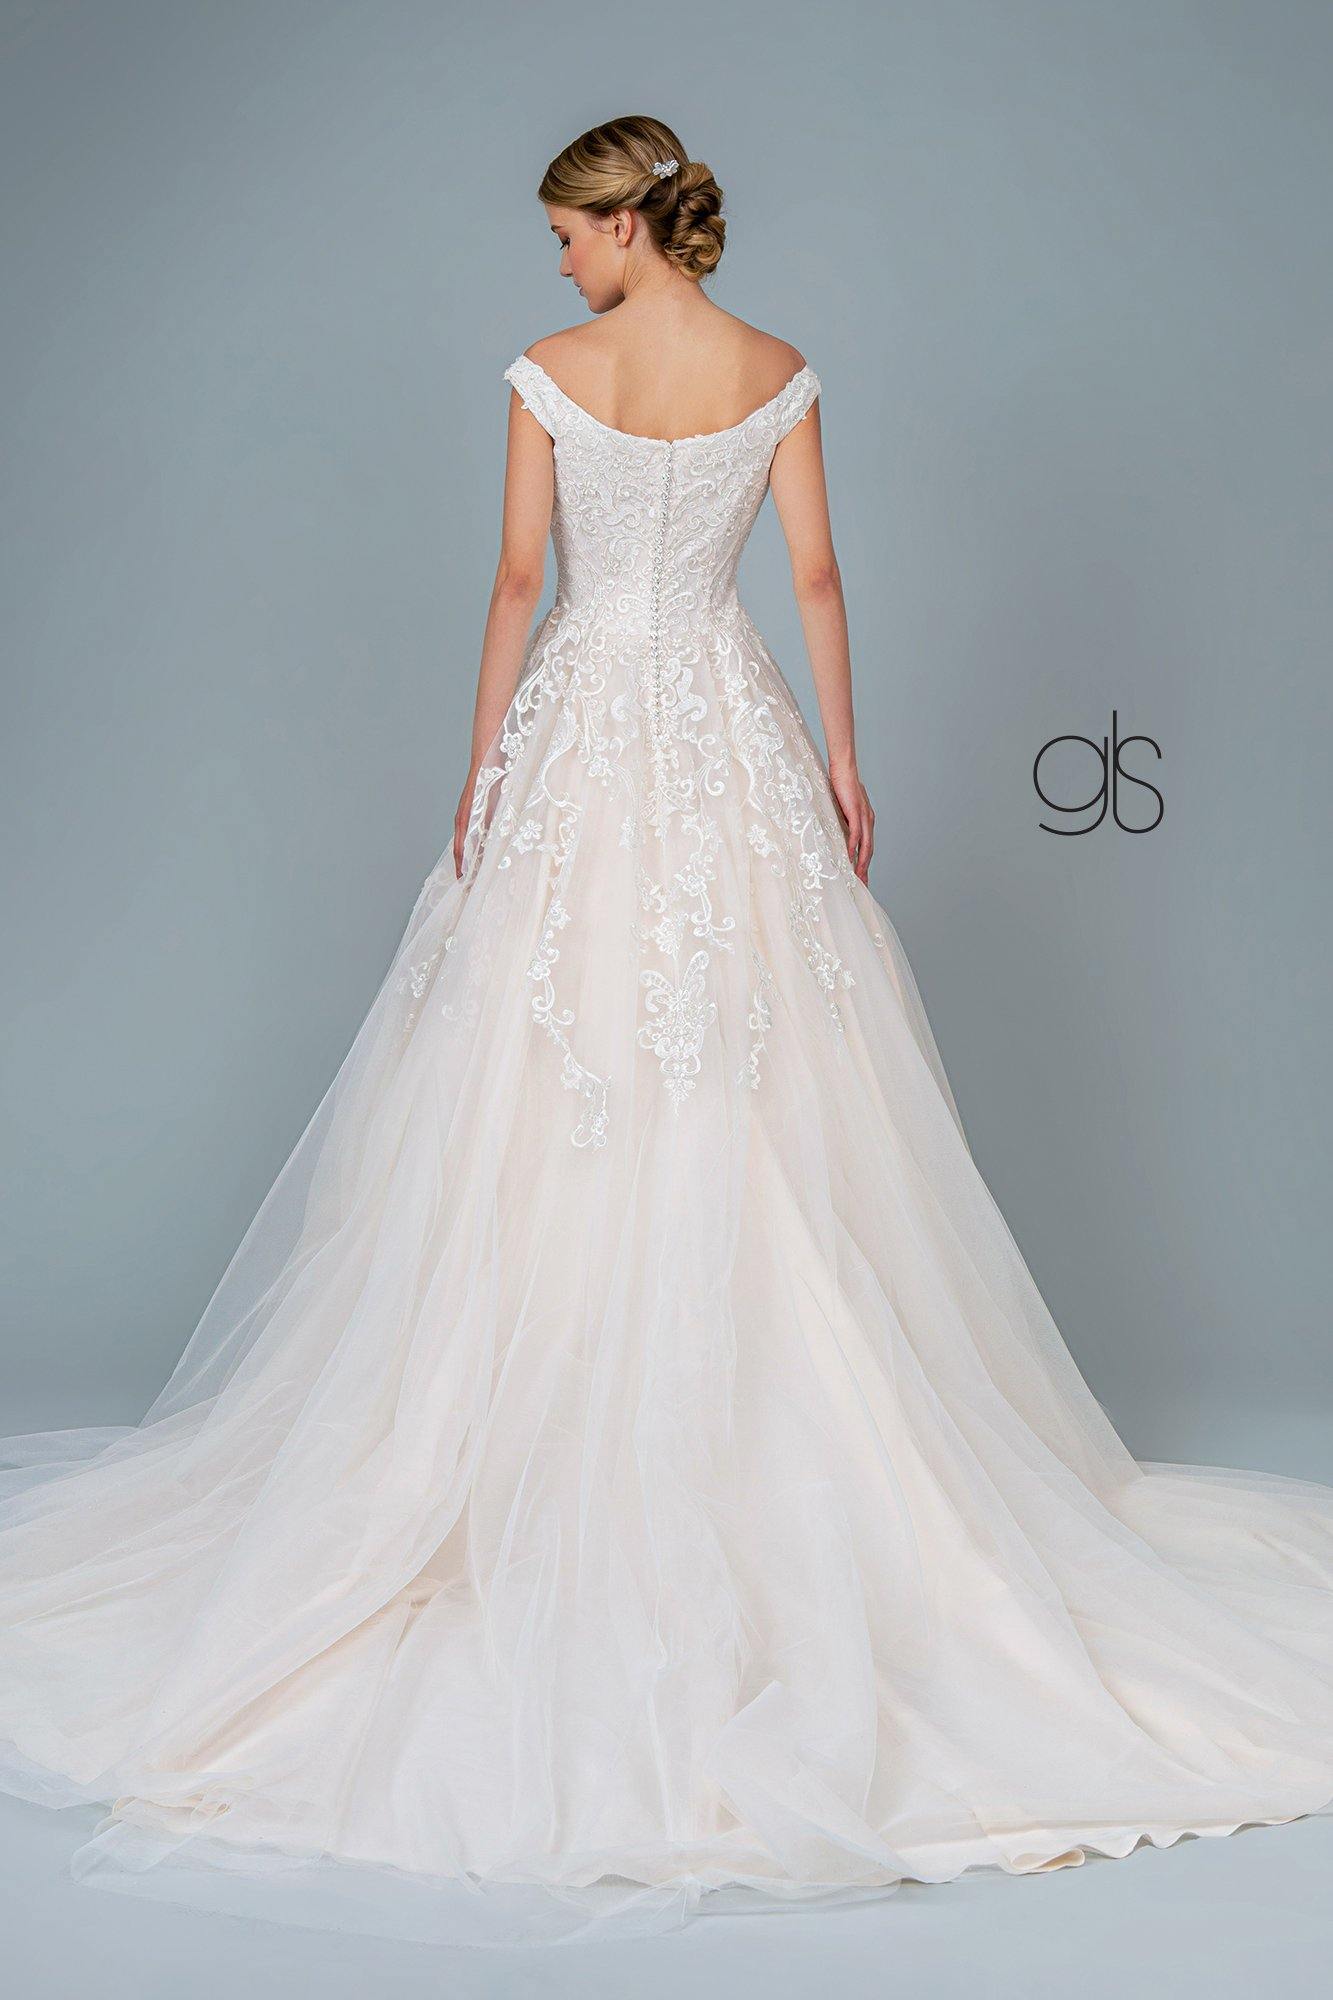 Embroidery Embellished Mesh A-Line Wedding Gown - The Dress Outlet Elizabeth K